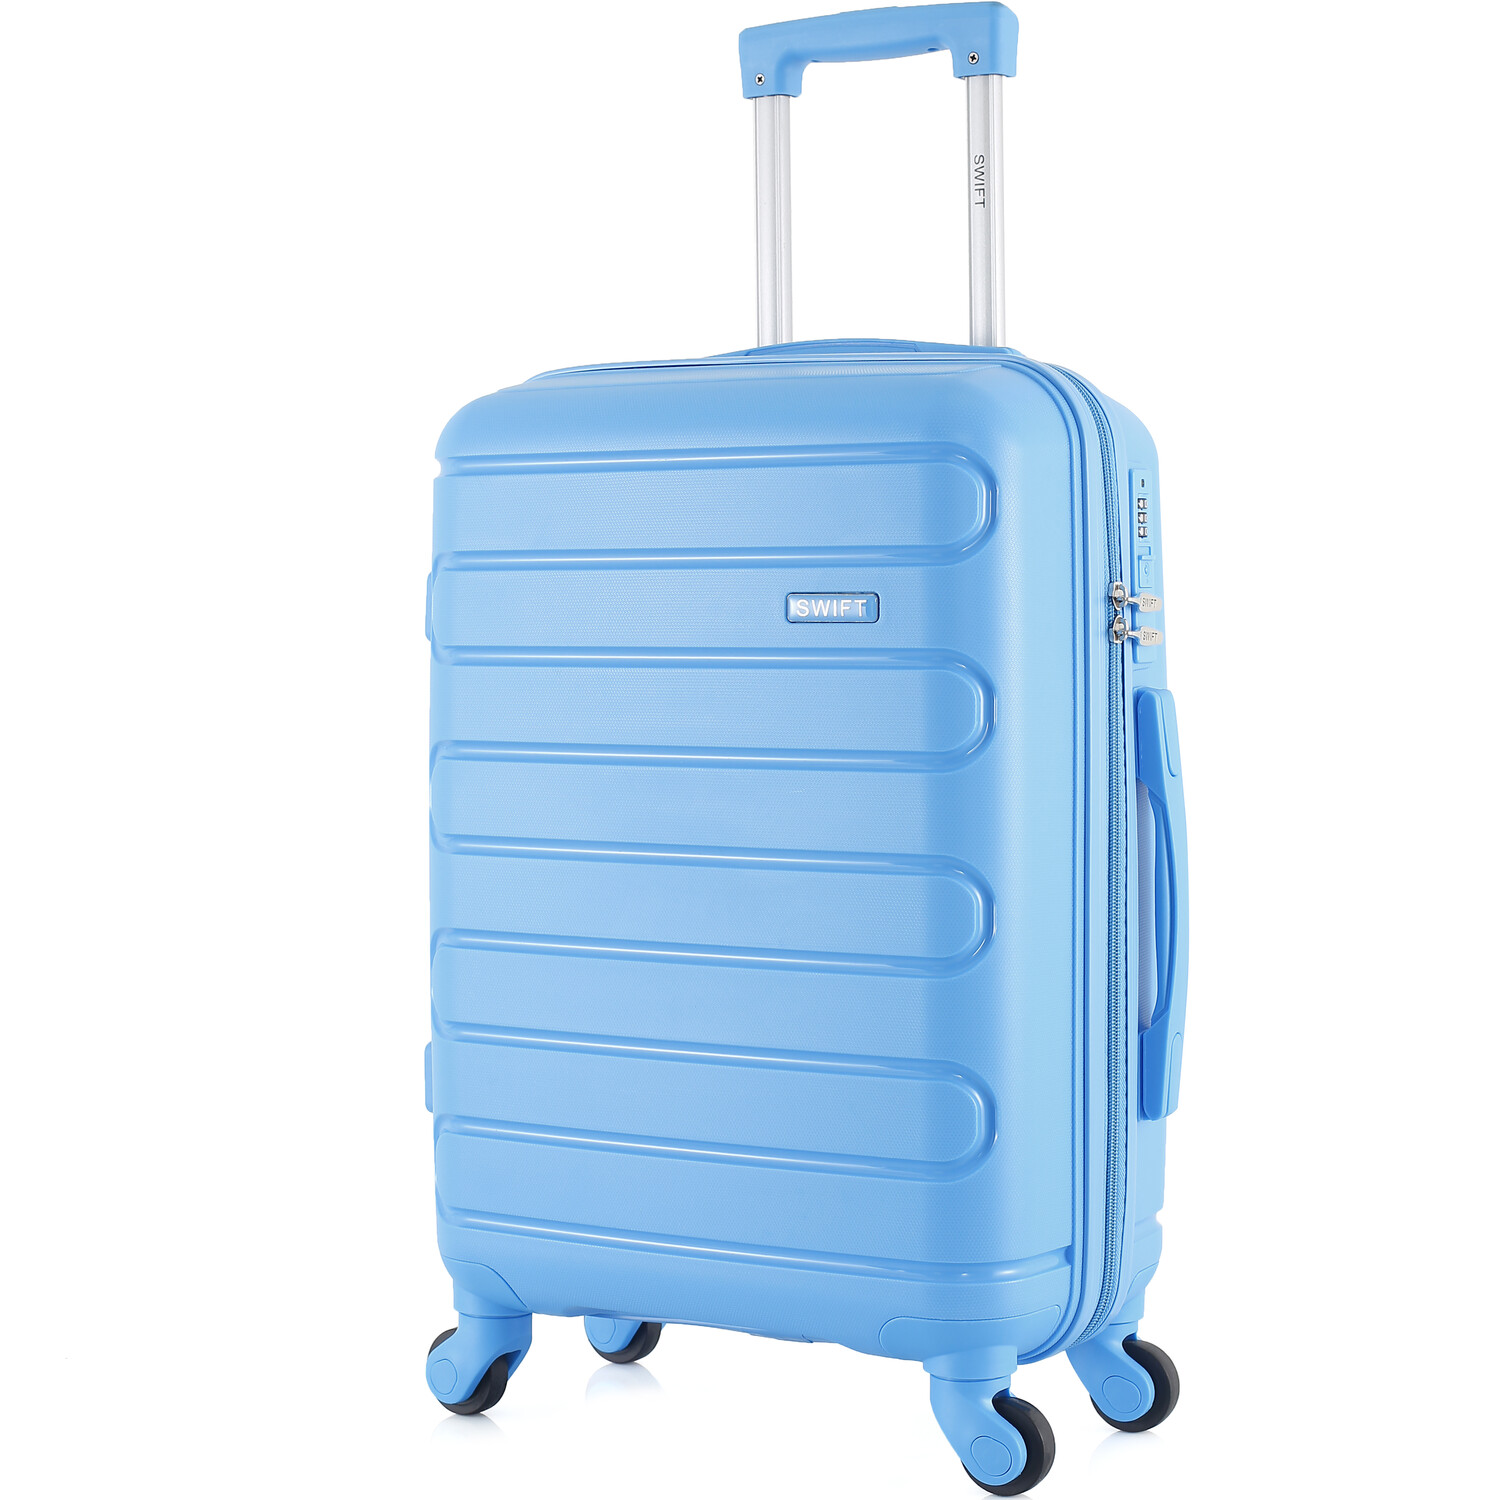 Swift Horizon Suitcase - Deep Teal / Large Case Image 2